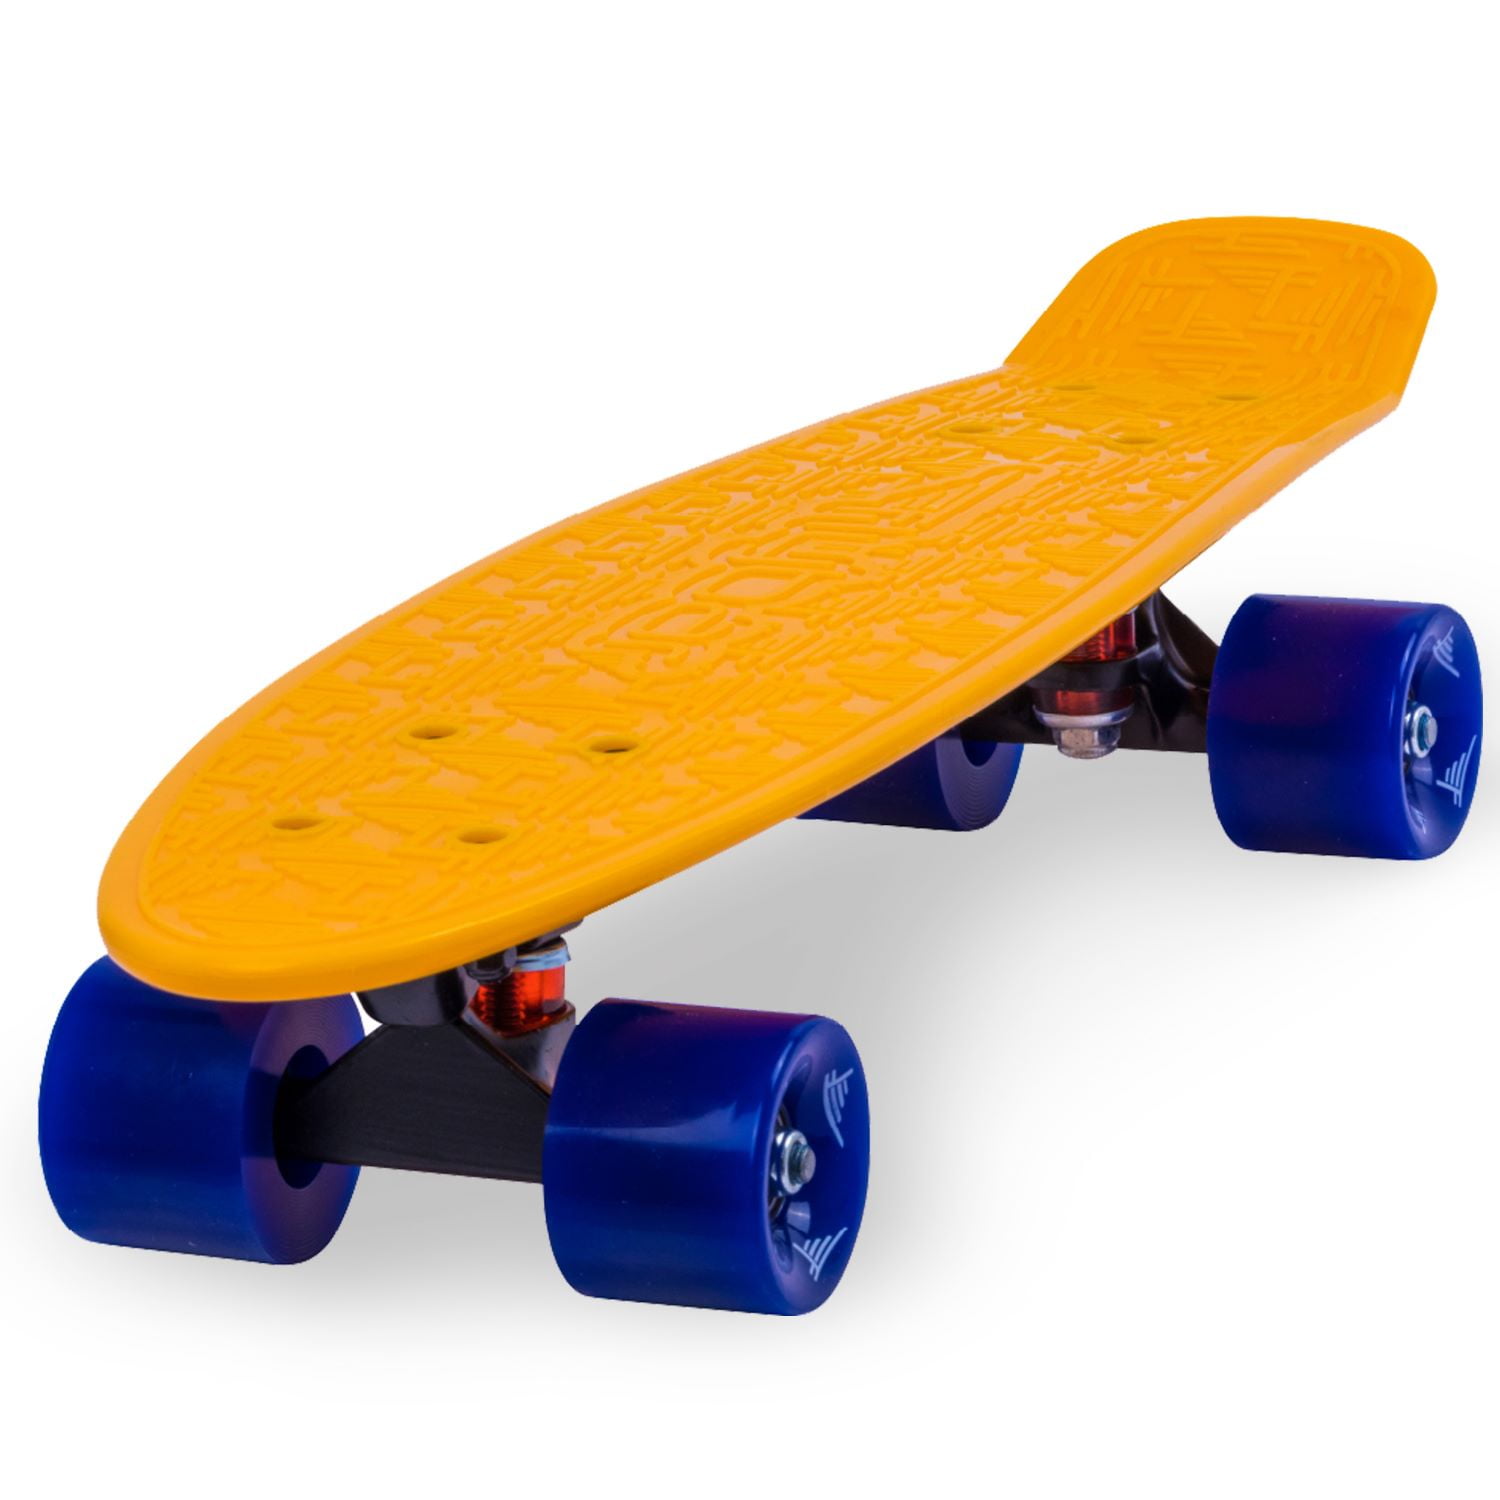 Flybar 22 inch Plastic Cruiser Skateboard, Non-Slip Deck, for Boys and Girls Ages 6+ up to Orange - Walmart.com